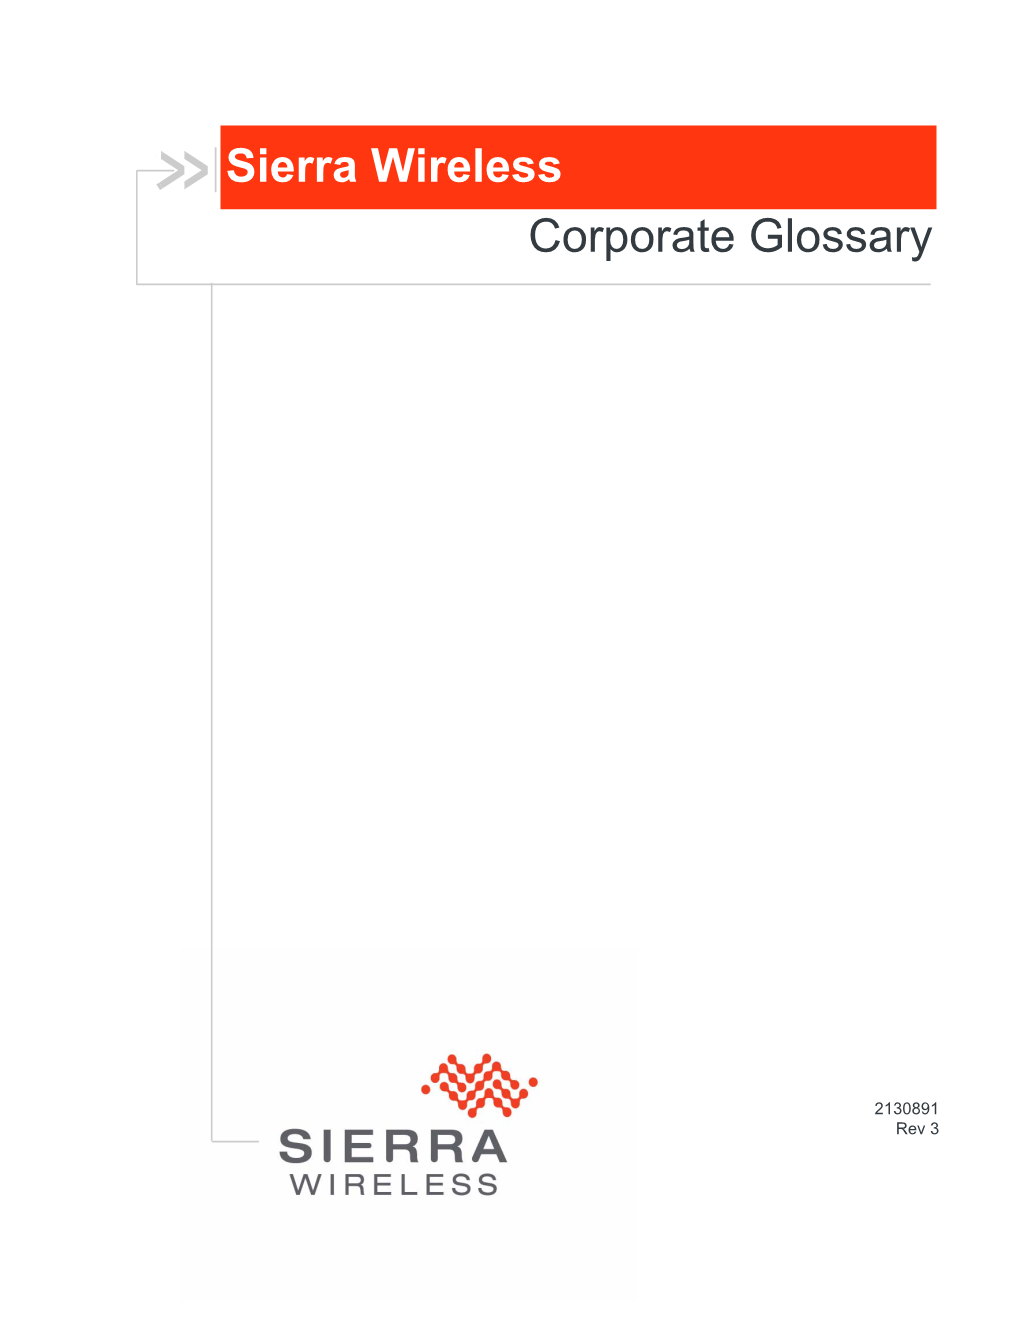 Sierra Wireless Corporate Glossary